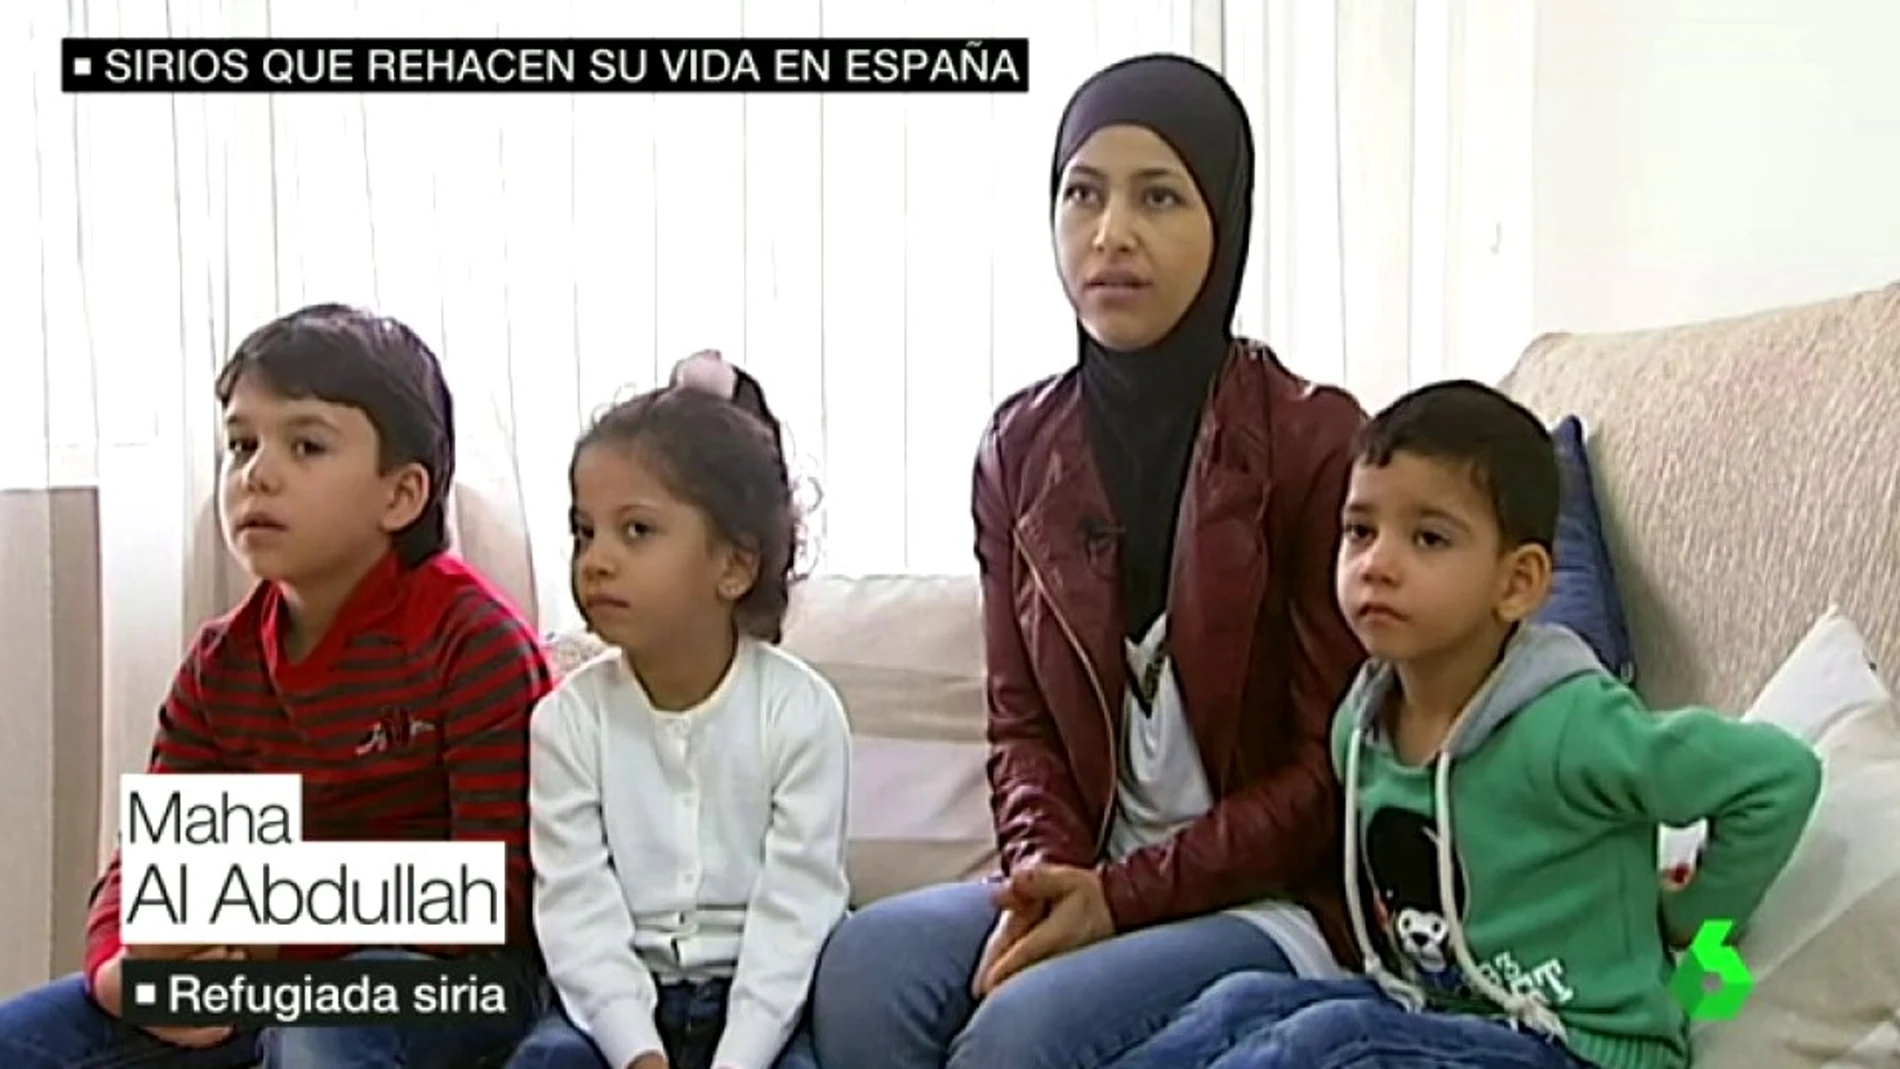 Maha, refugiada siria en Gijón